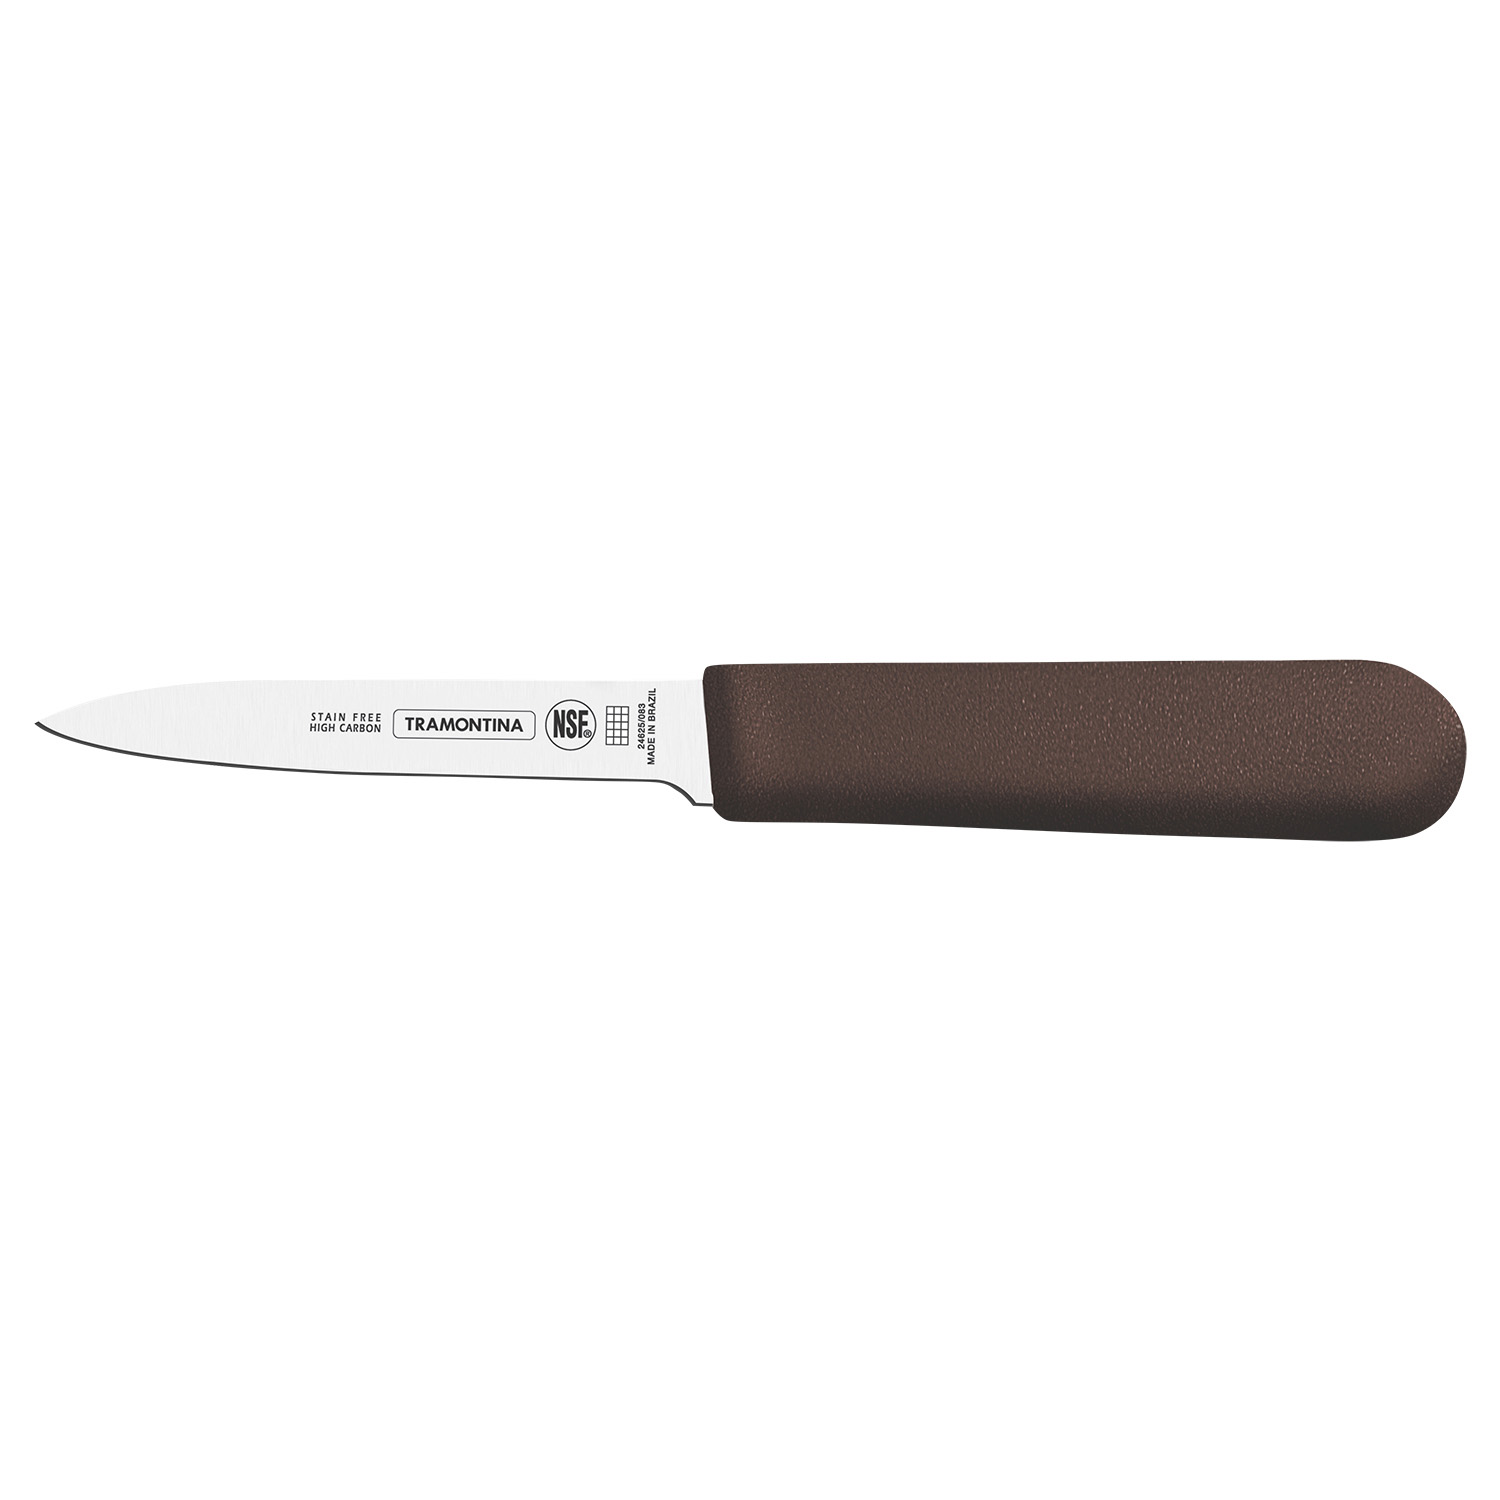 Нож Professional Master 102мм/199мм для овощей коричневый